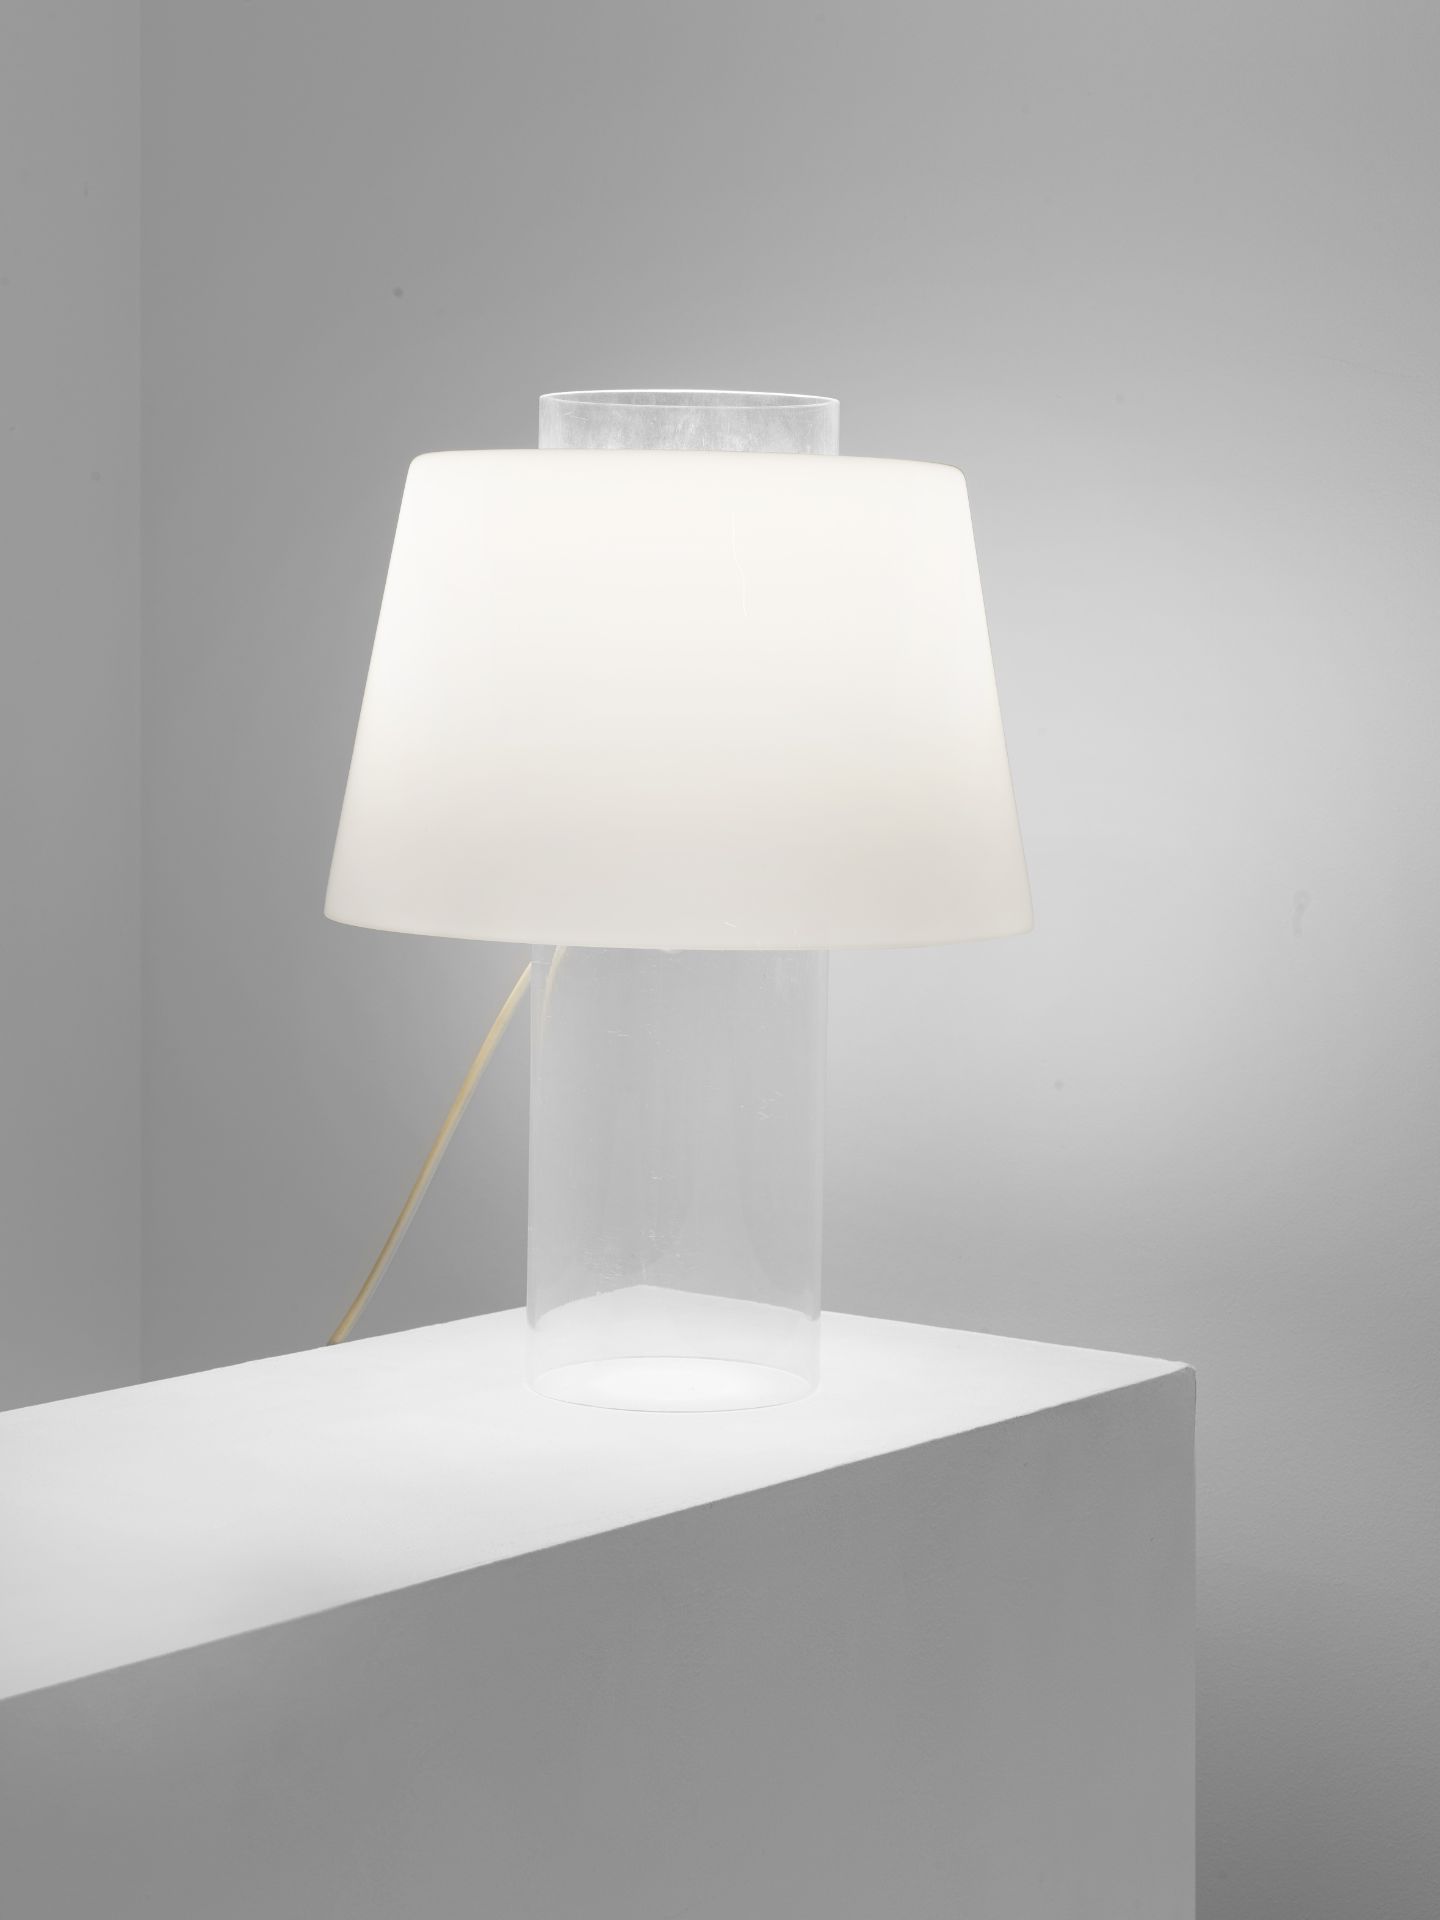 Yki Nummi 'Modern Art' table lamp, model no. 44-405, designed 1955, produced 1960-1980